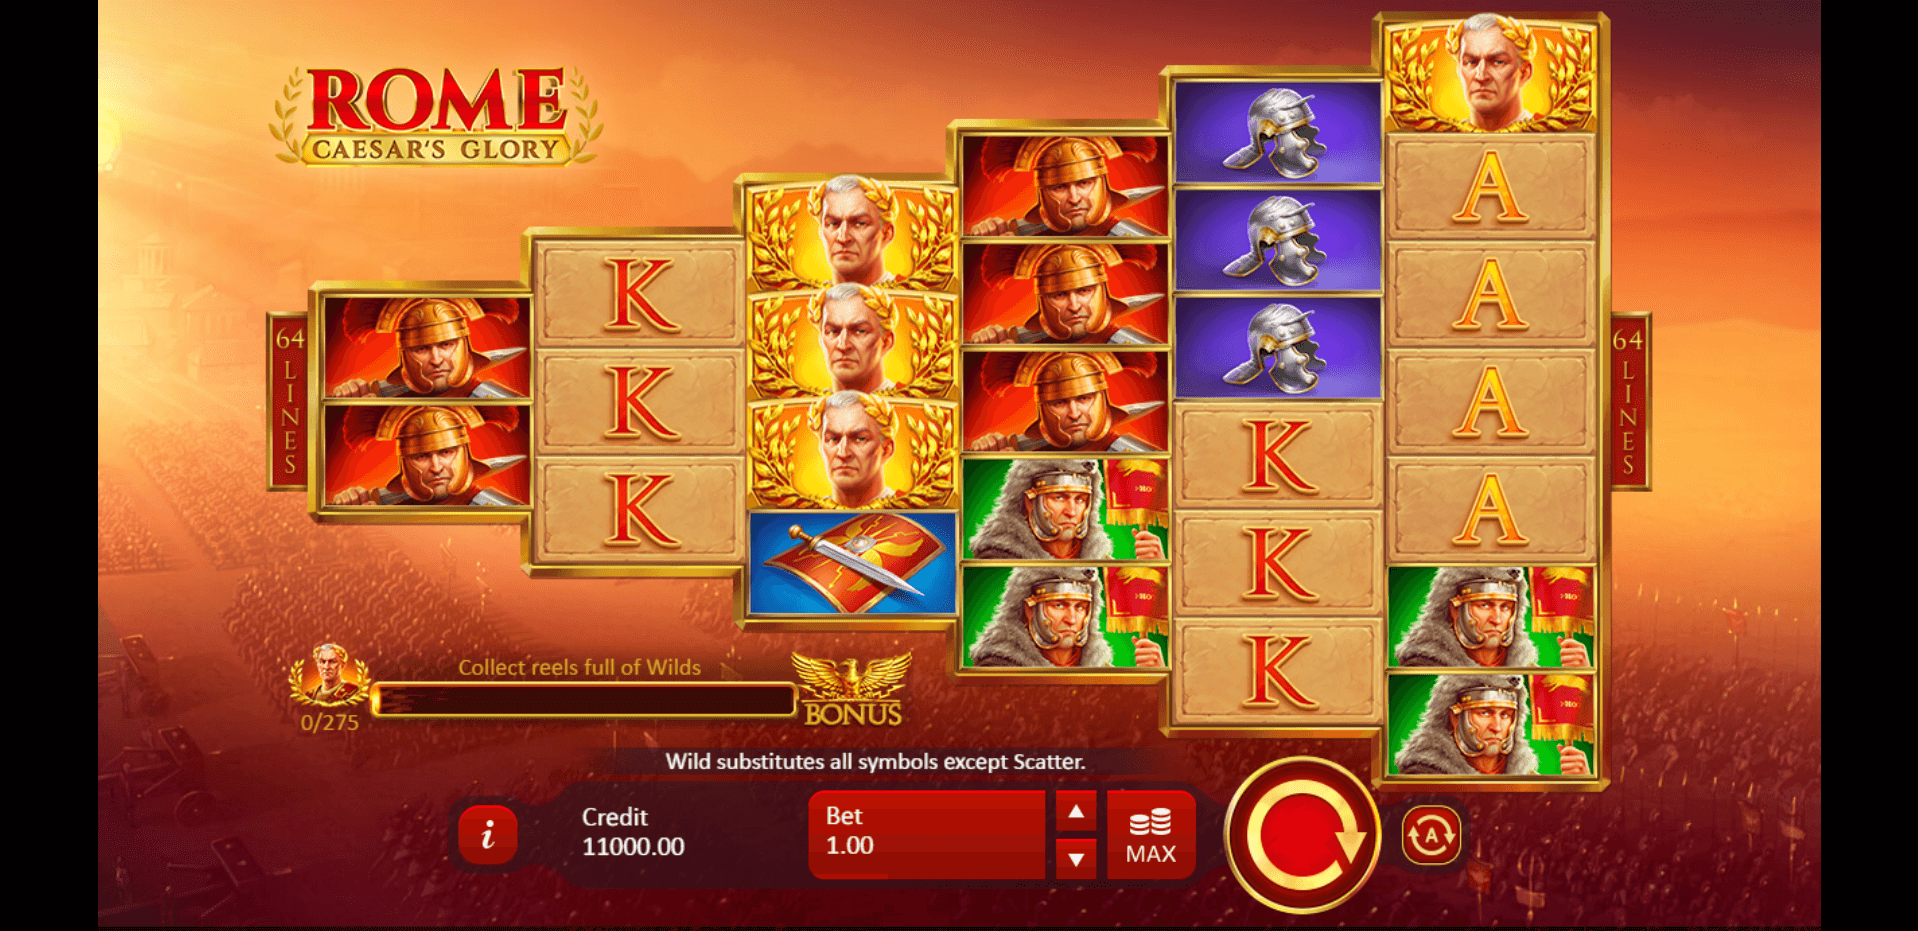 Rome Caesars Glory Slot Machine \u15ce Play FREE Casino Game Online by Playson